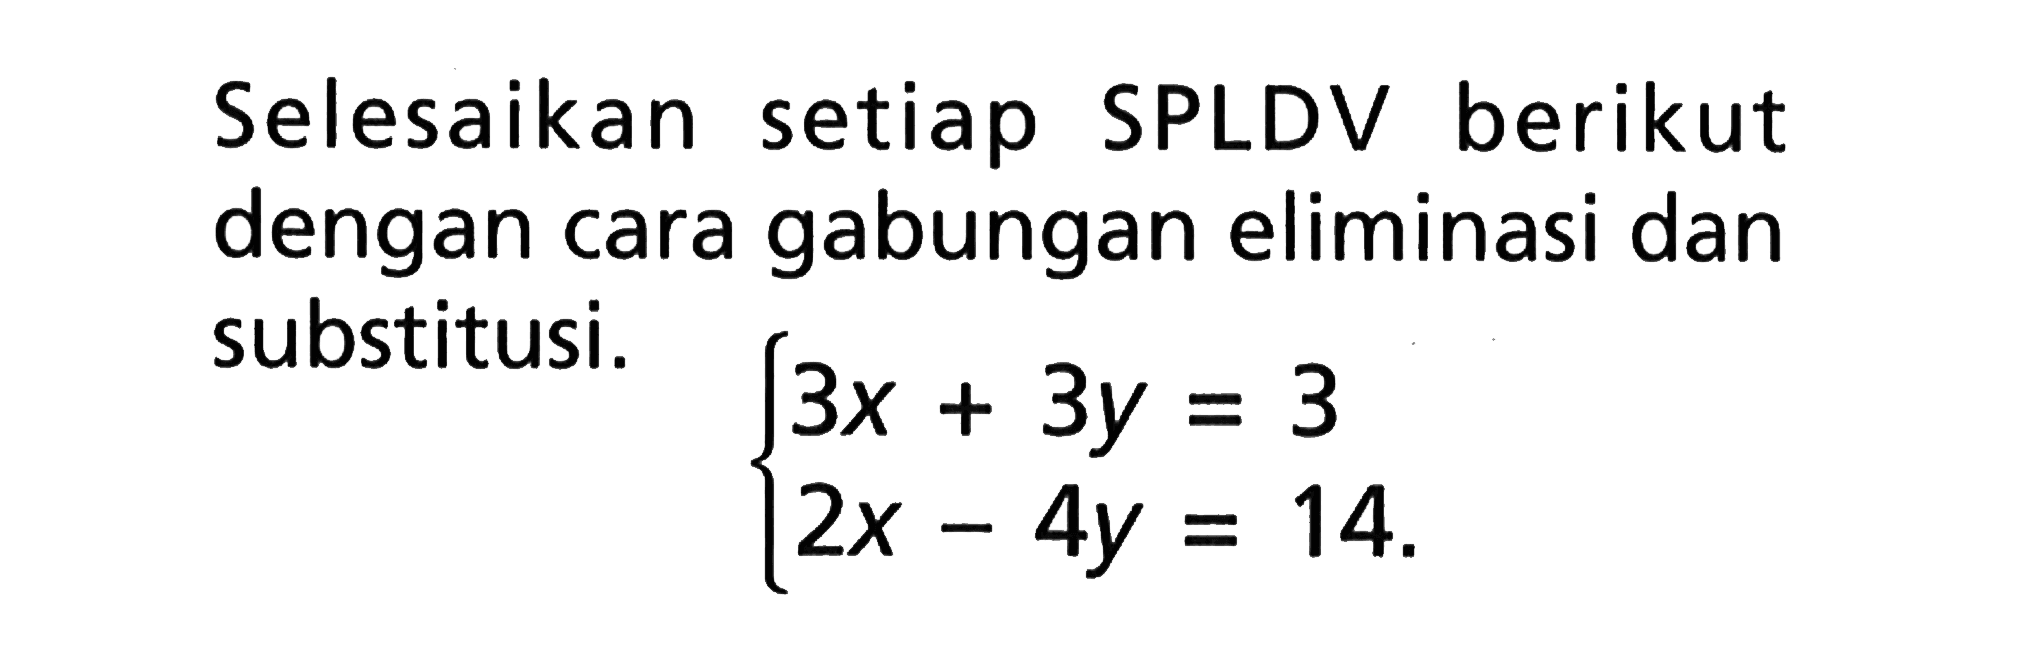 Selesaikan setiap SPLDV berikut dengan cara gabungan eliminasi dan substitusi. 3x + 3y = 3 2x - 4y = 14